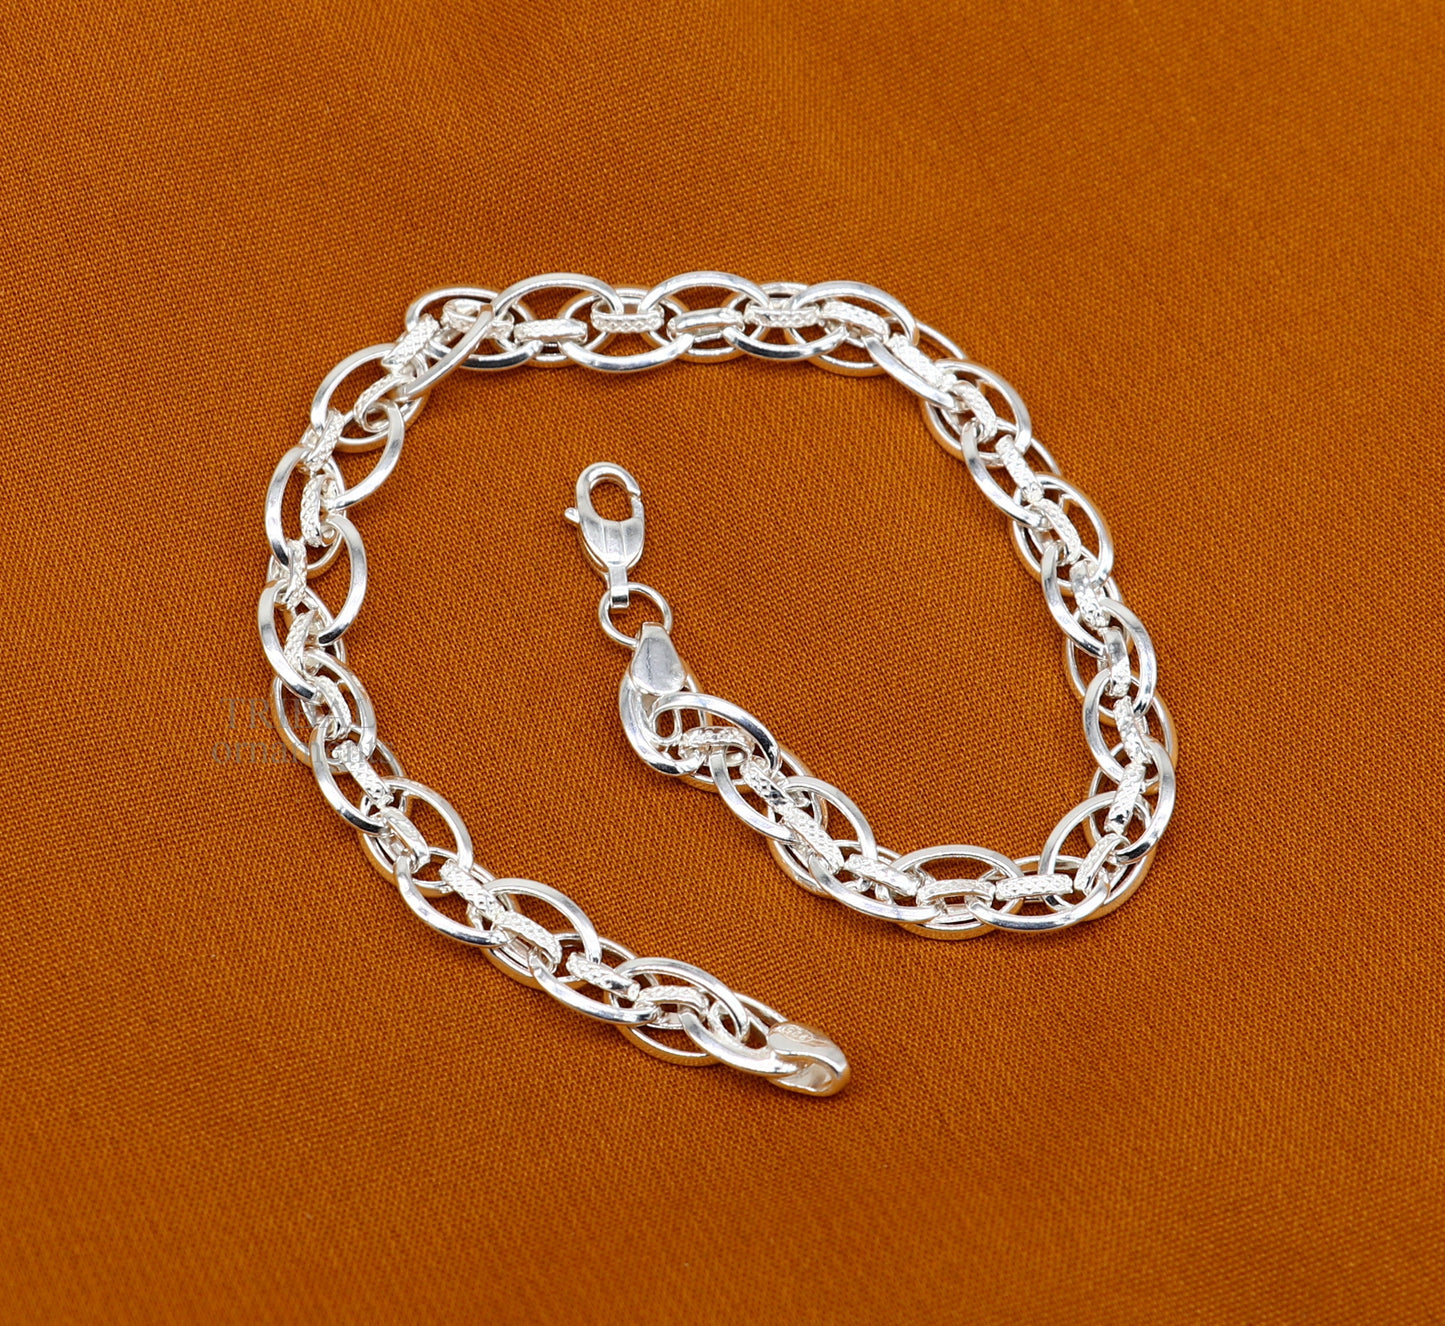 Stylish 925 sterling silver handmade Bracelet for girl's, Dainty Silver Bracelet, Chain Bracelet, Minimal Jewelry, Gift For Women nsbr509 - TRIBAL ORNAMENTS